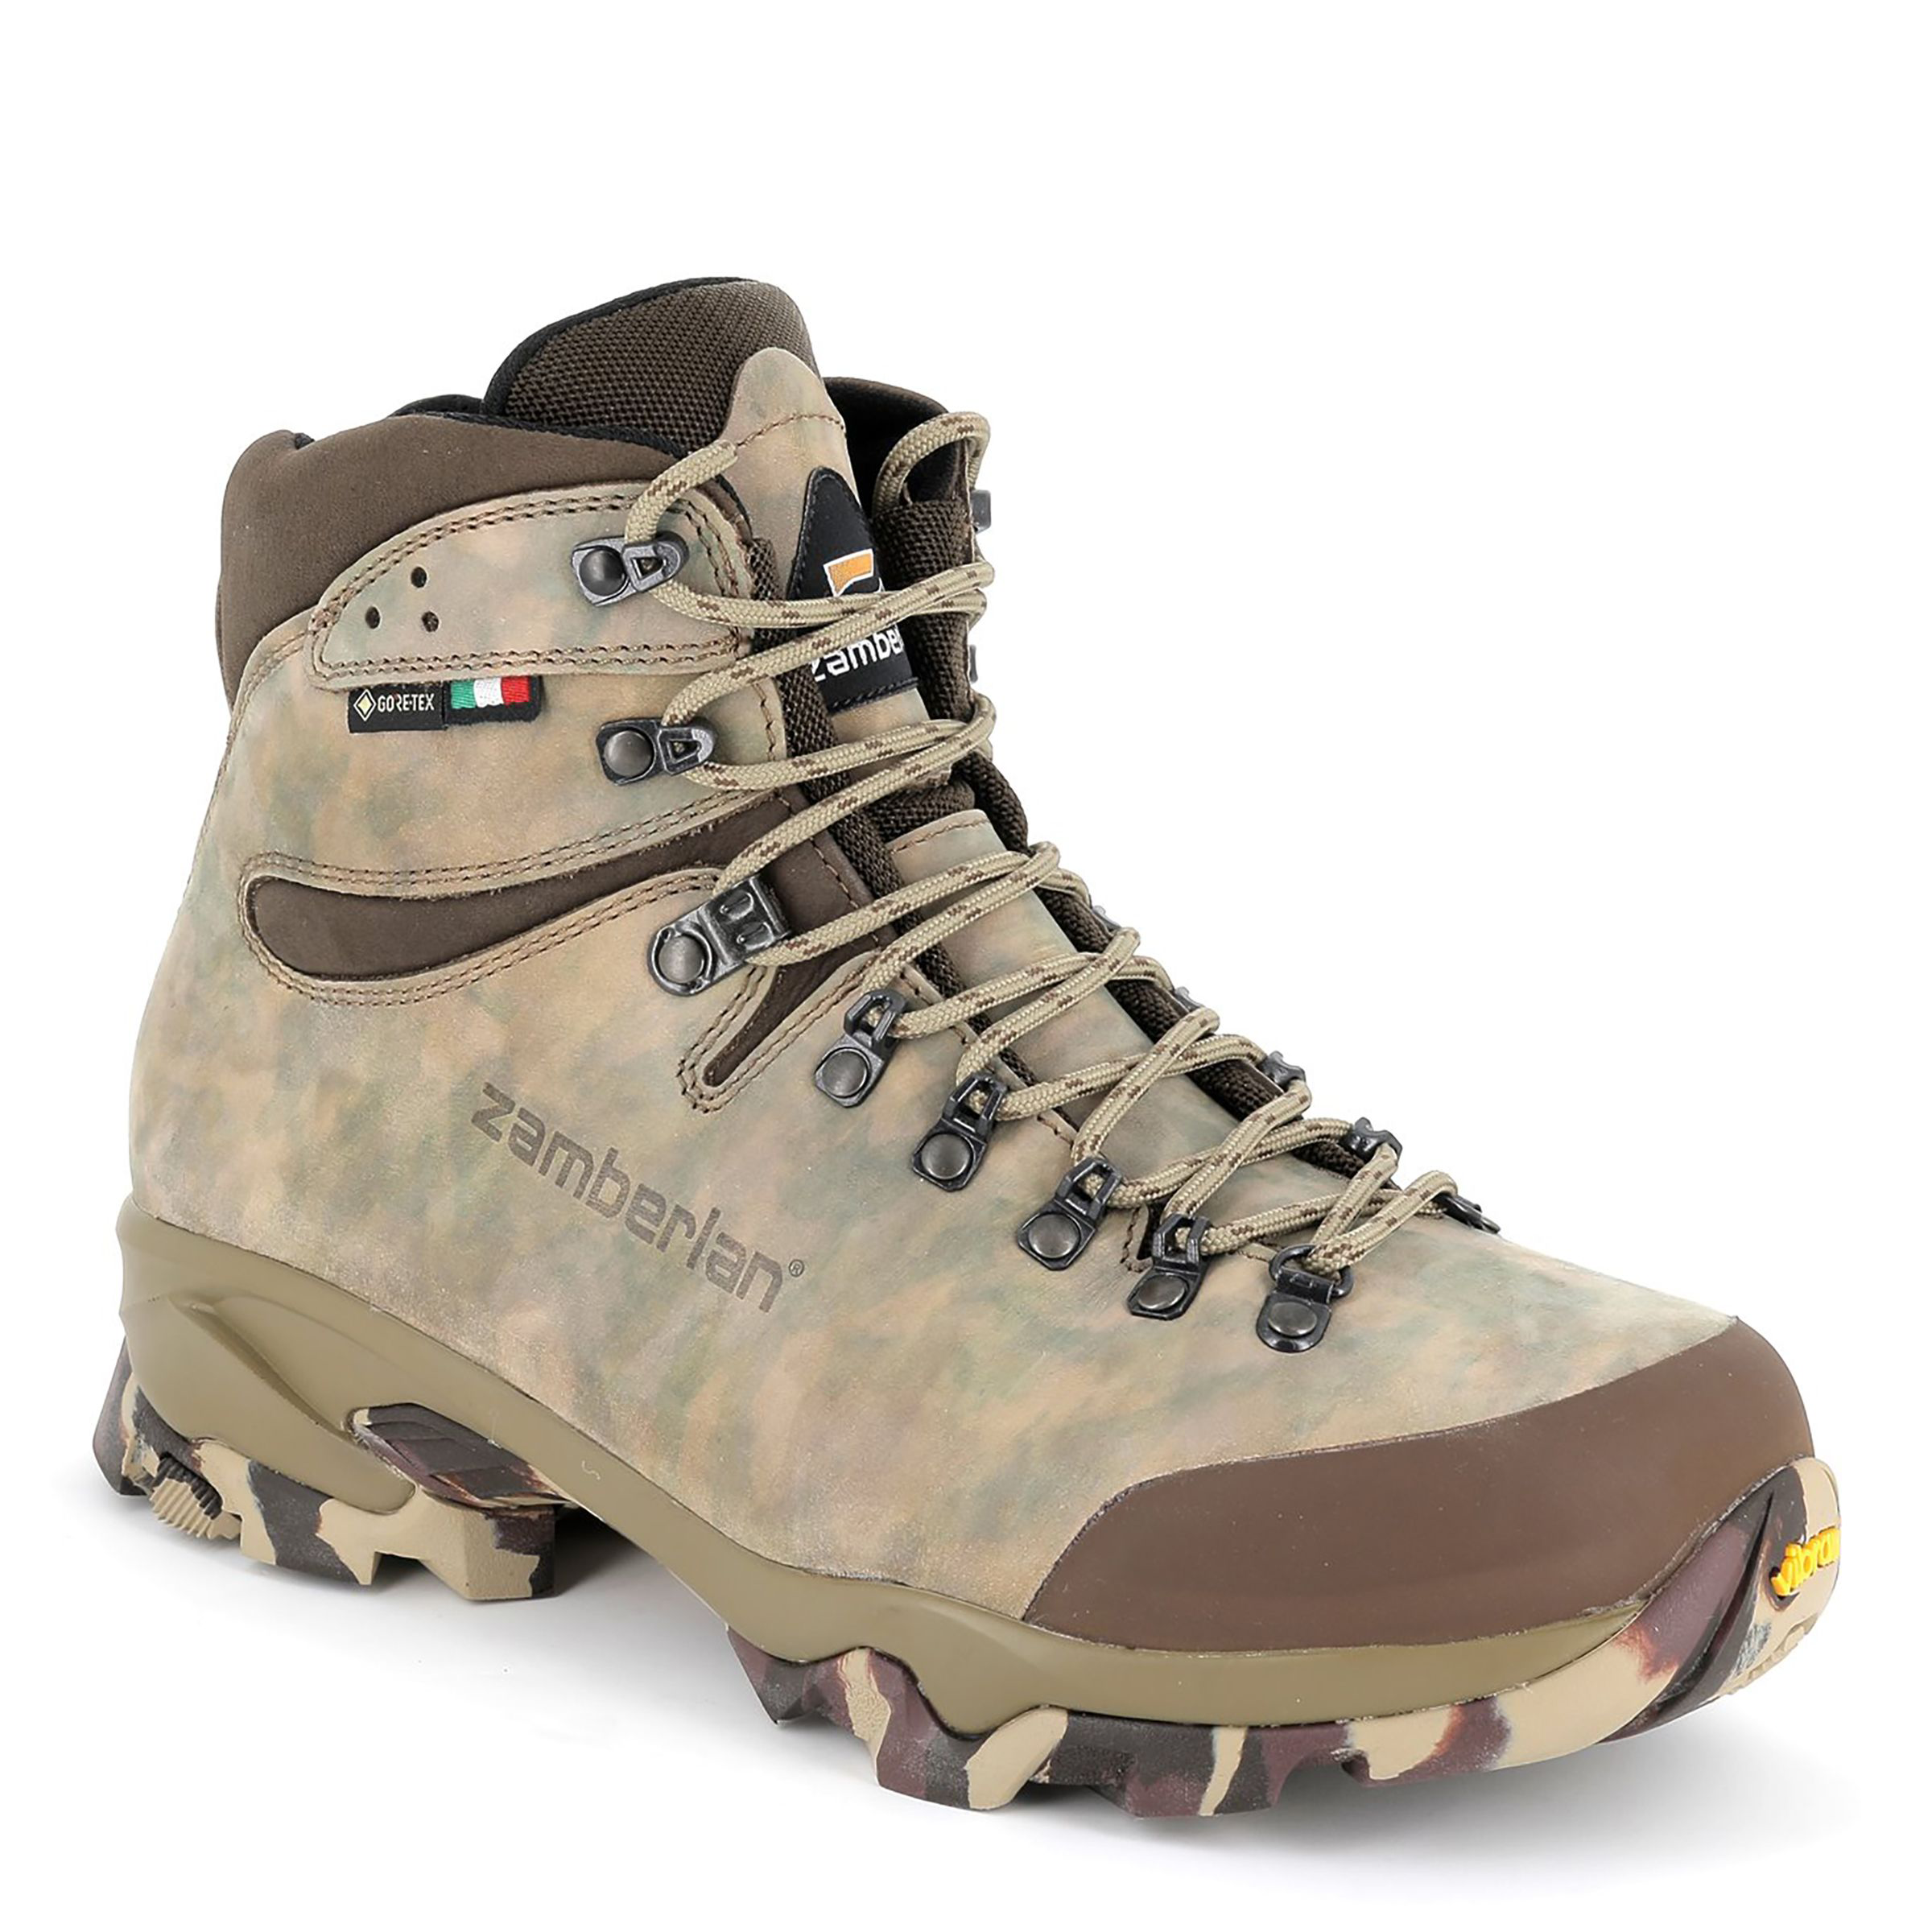 Zamberlan 1213 Leopard GTX RR GORE-TEX Hunting Boots for Men - Beige - 13M